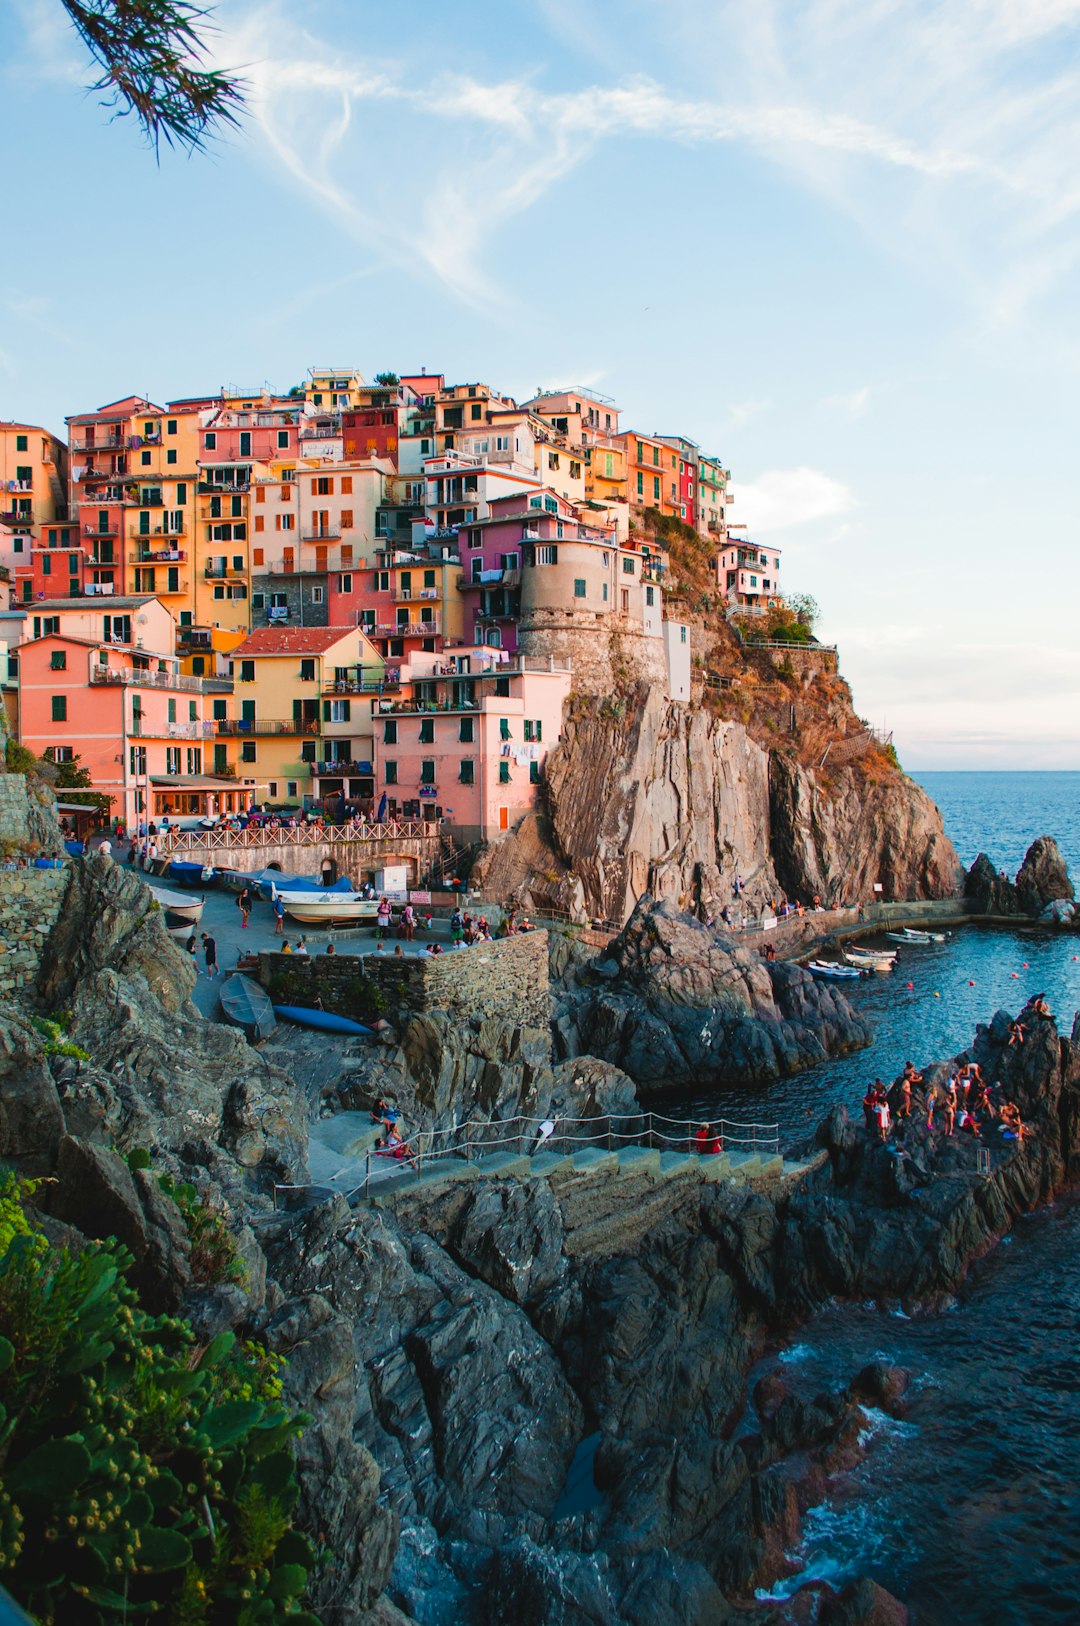 Capturing Italian charm for Instagram